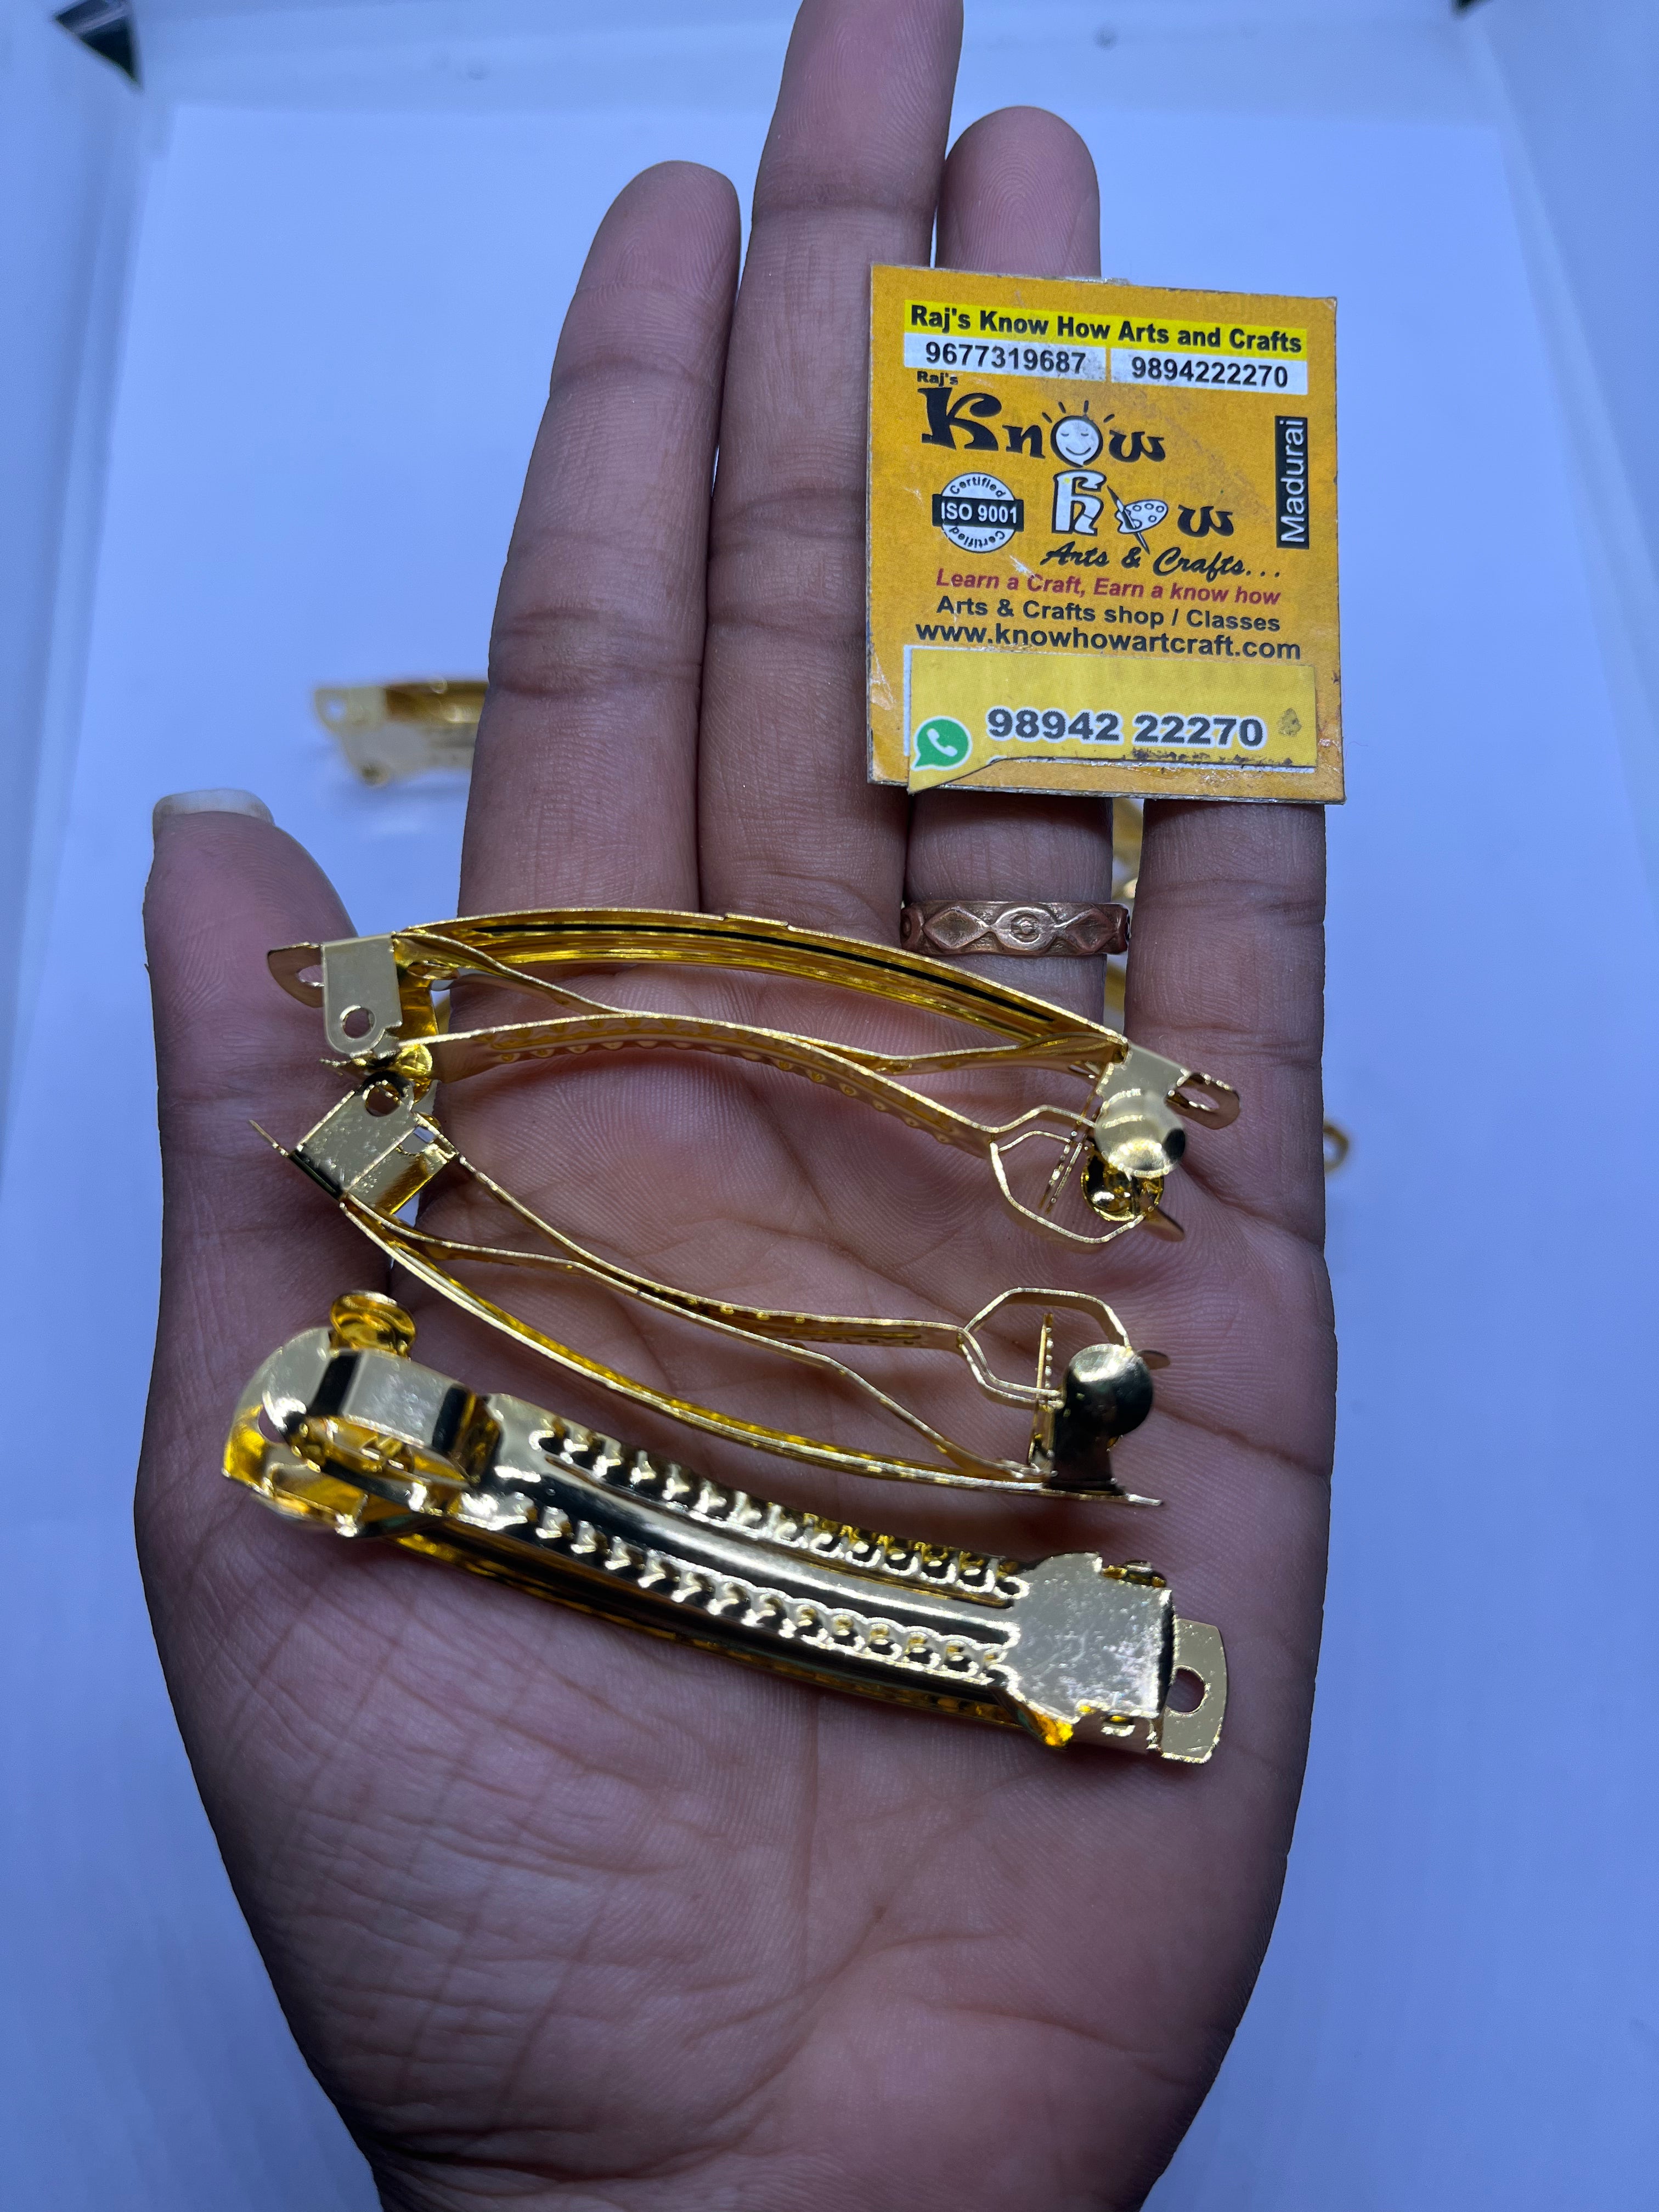 Alligator gold clips 2pc approximately - medium size